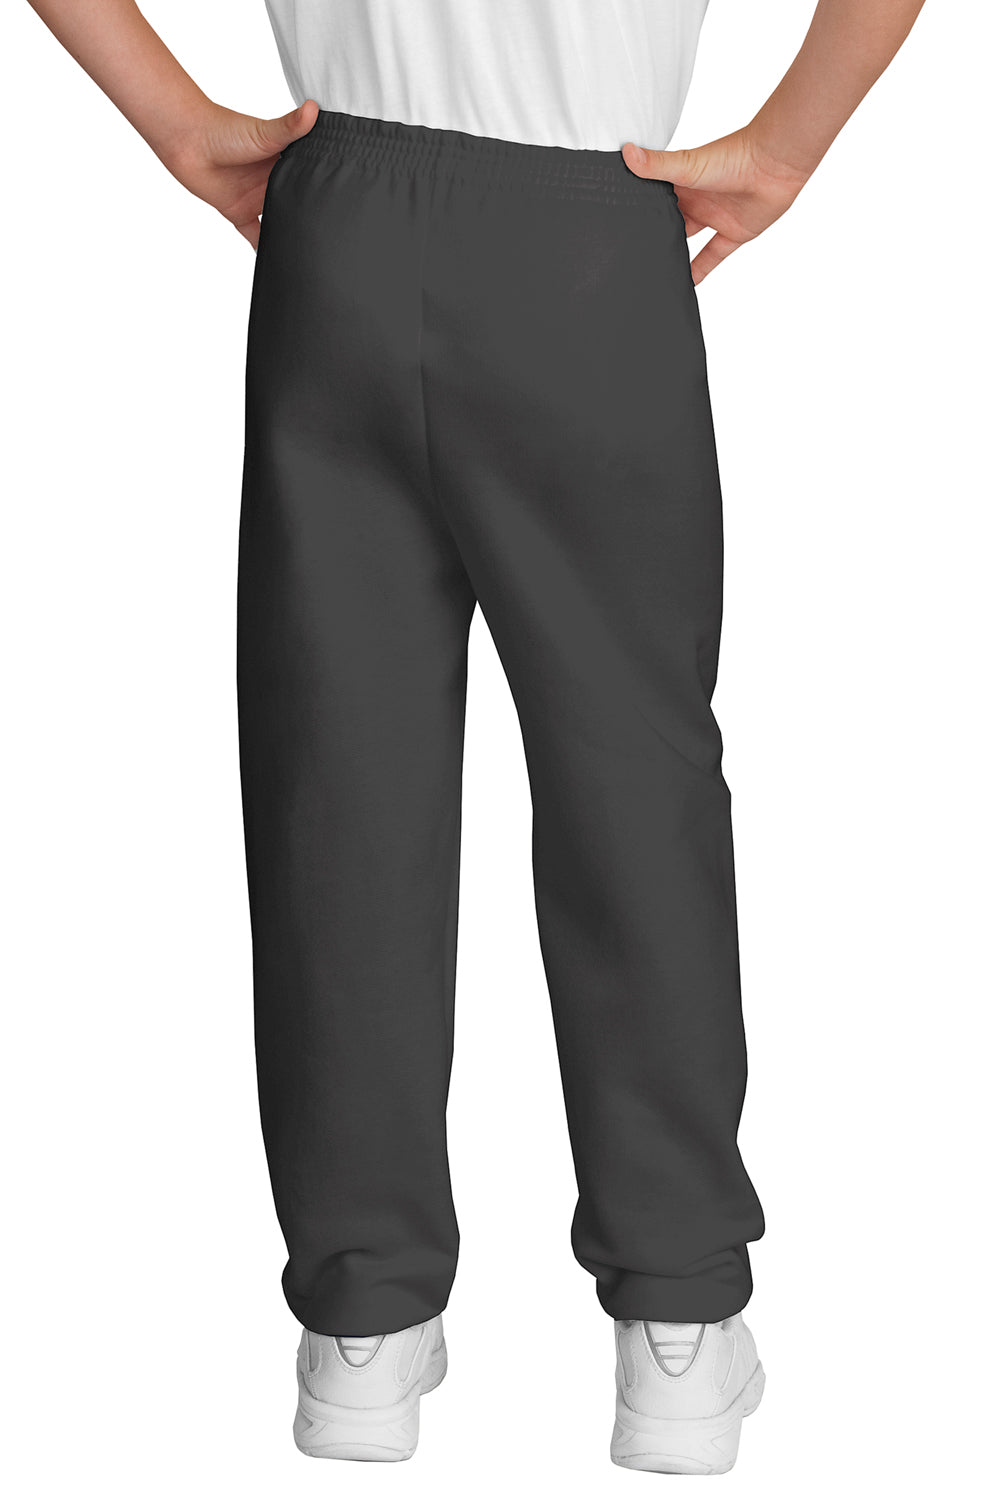 Port & Company PC90YP Core Fleece Sweatpants Charcoal Grey Back